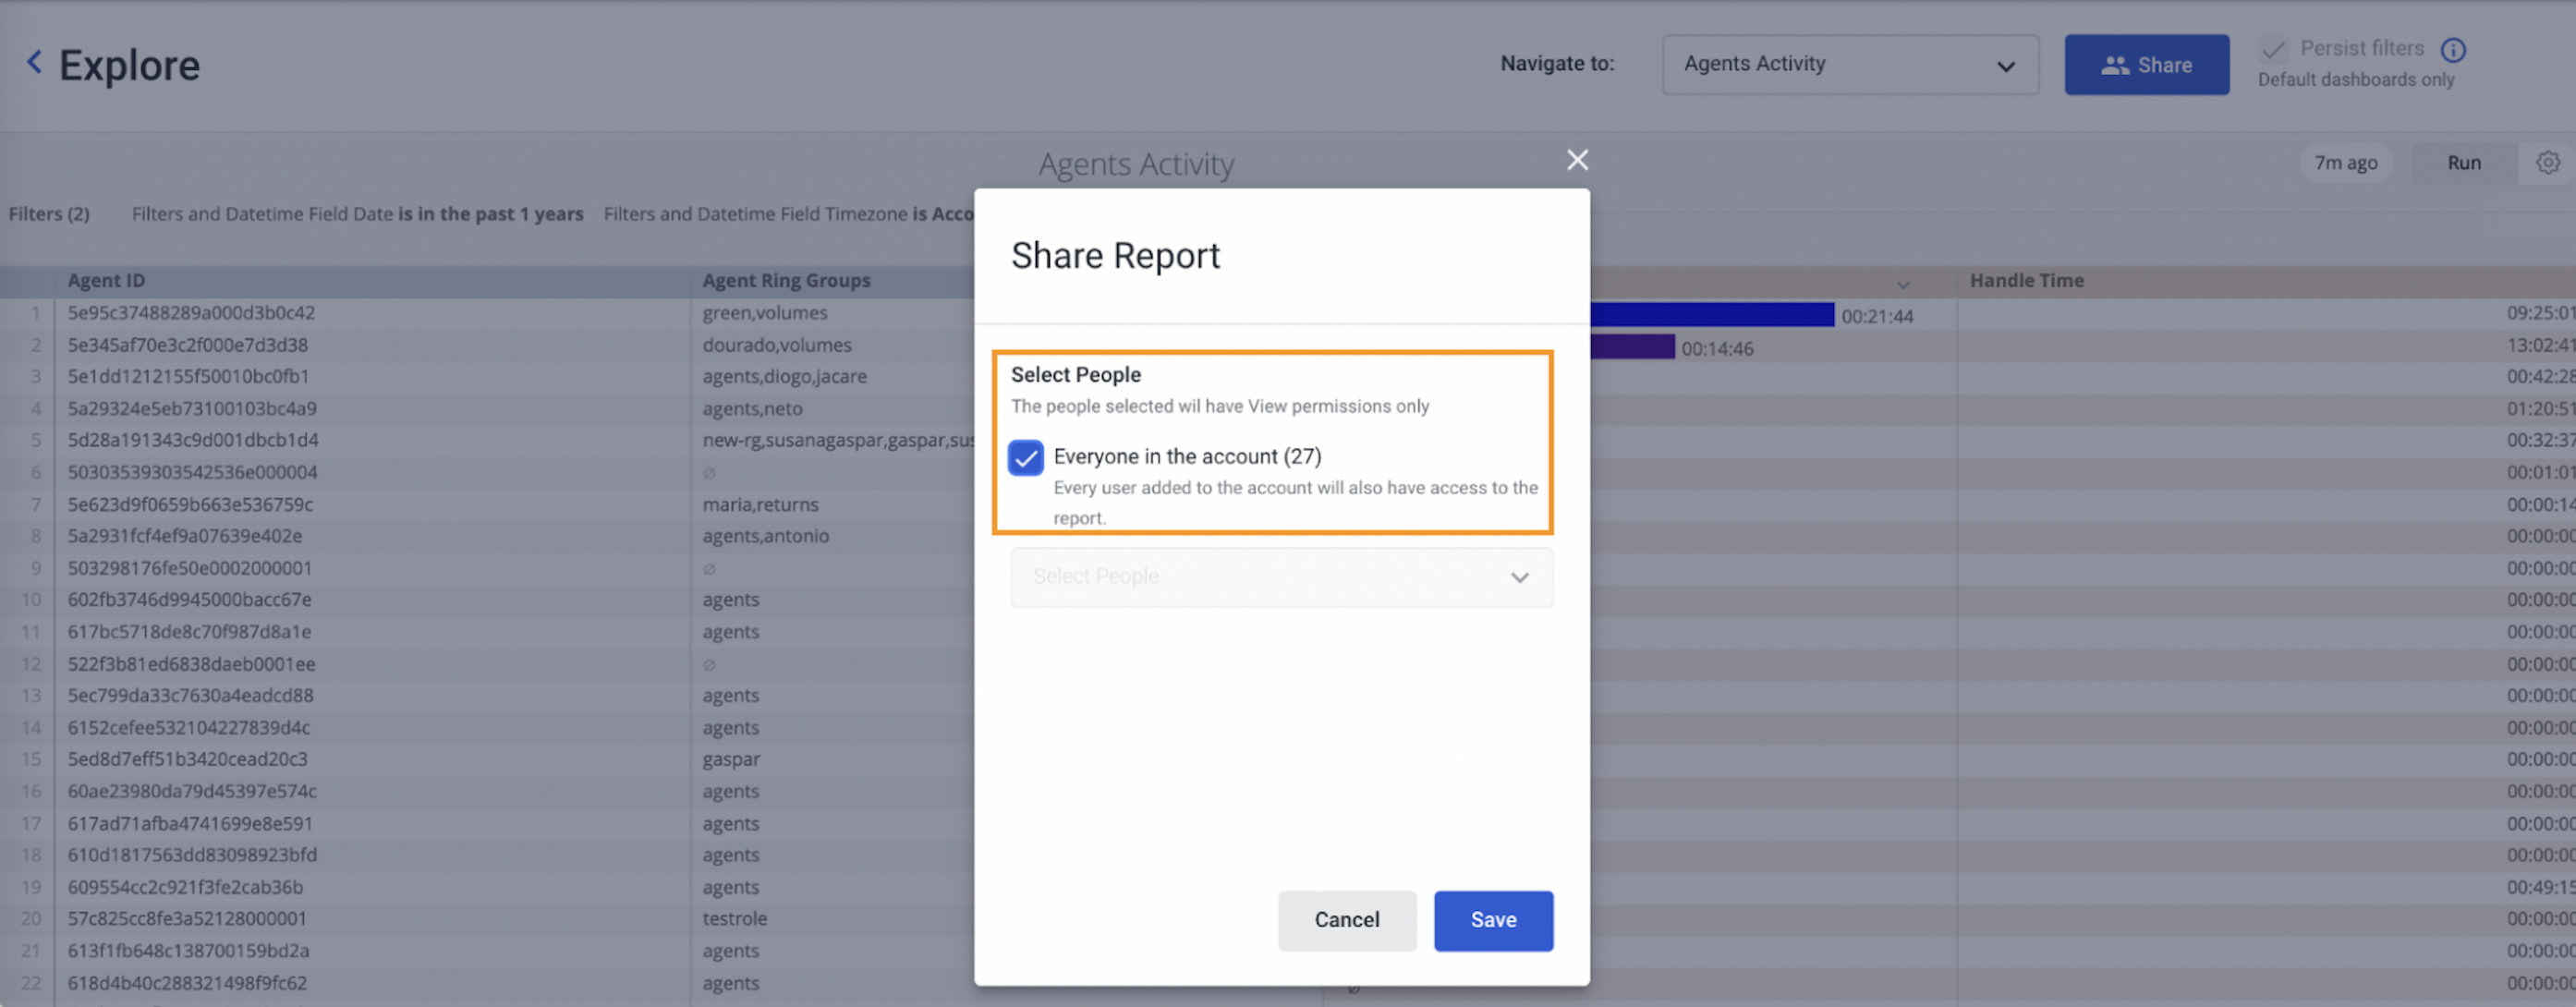 explore_share_custom_reports_11.png